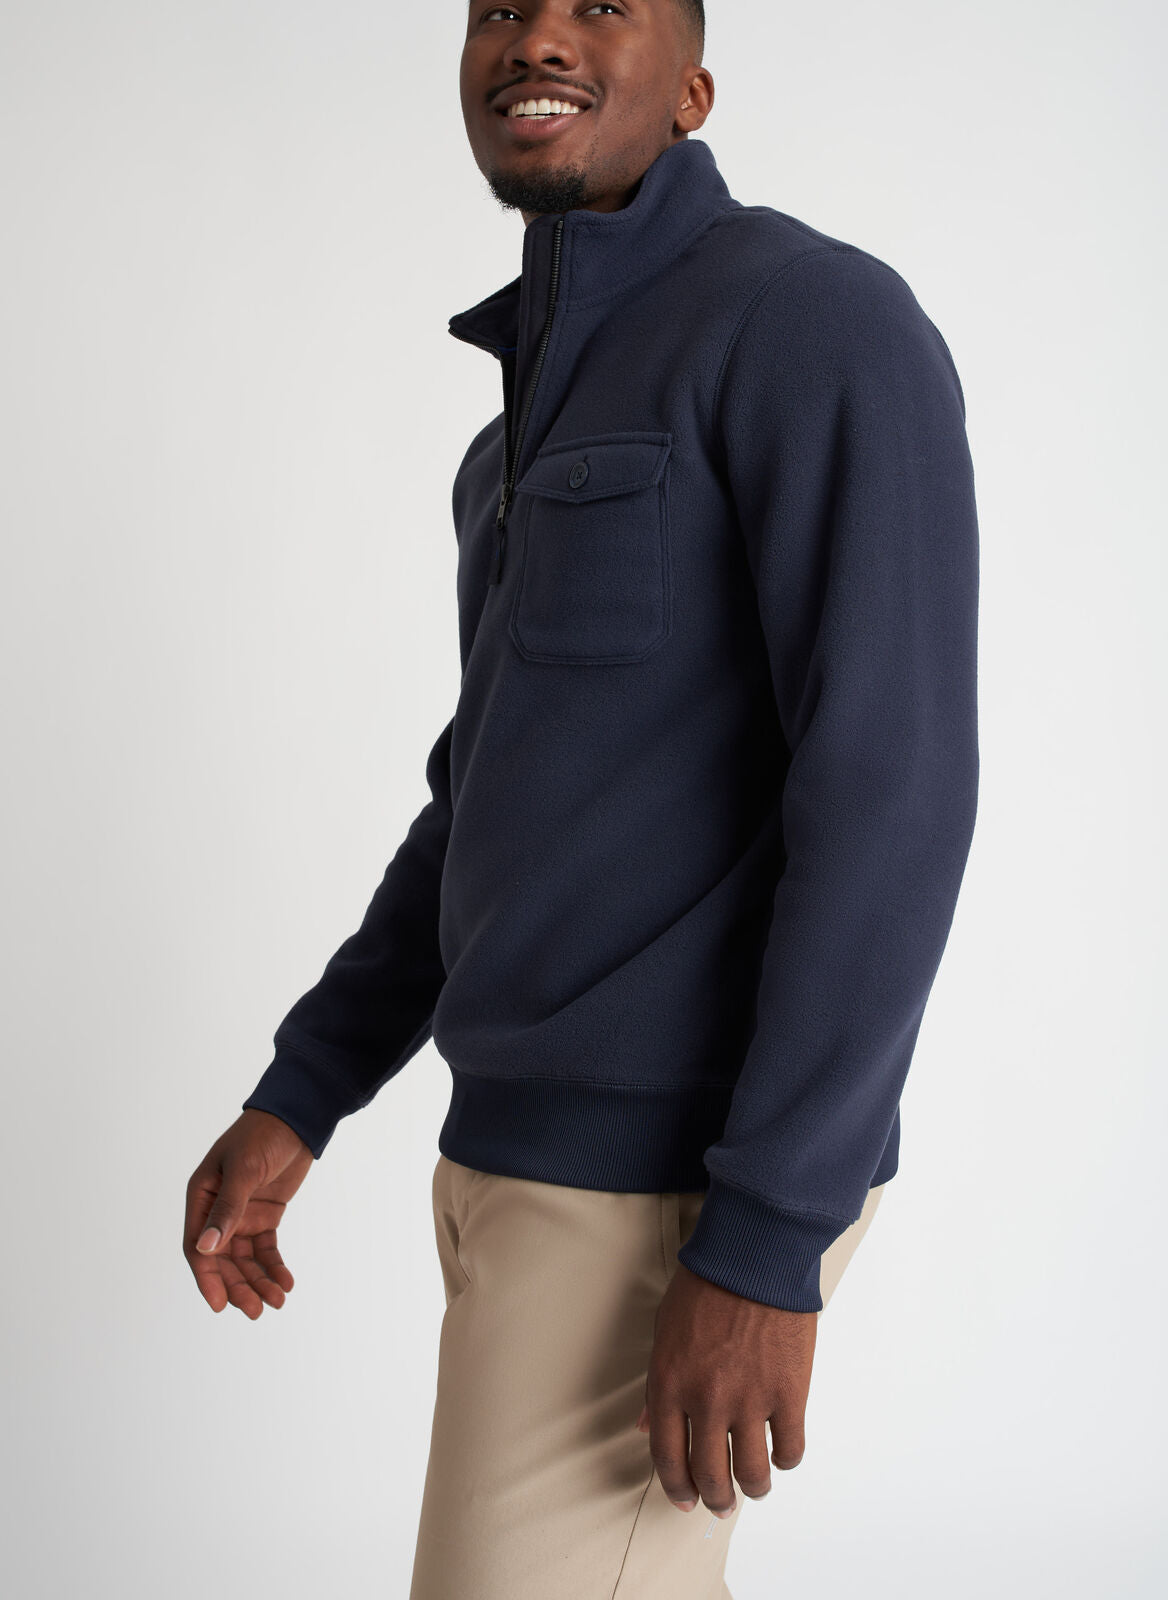 Kit and Ace — Water Resistant Fleece Zip Pullover